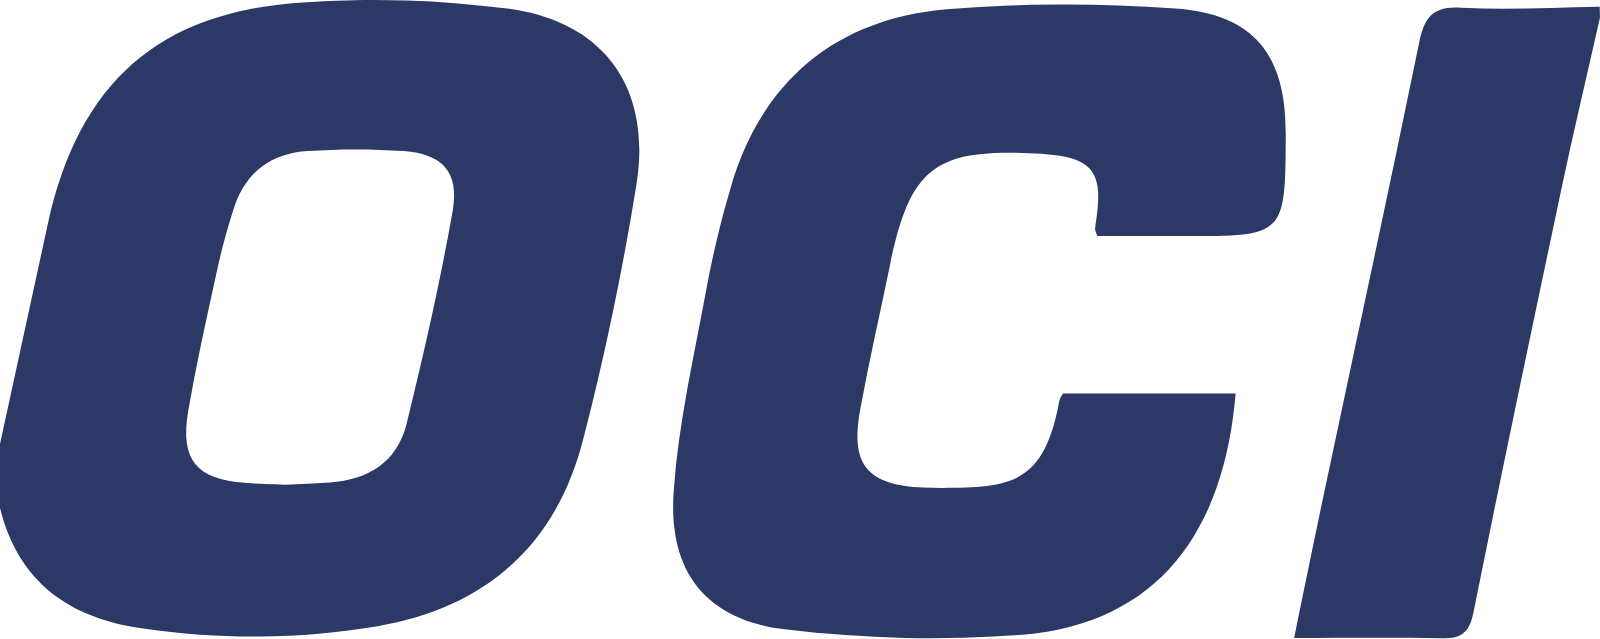 OCI logo (transparent PNG)